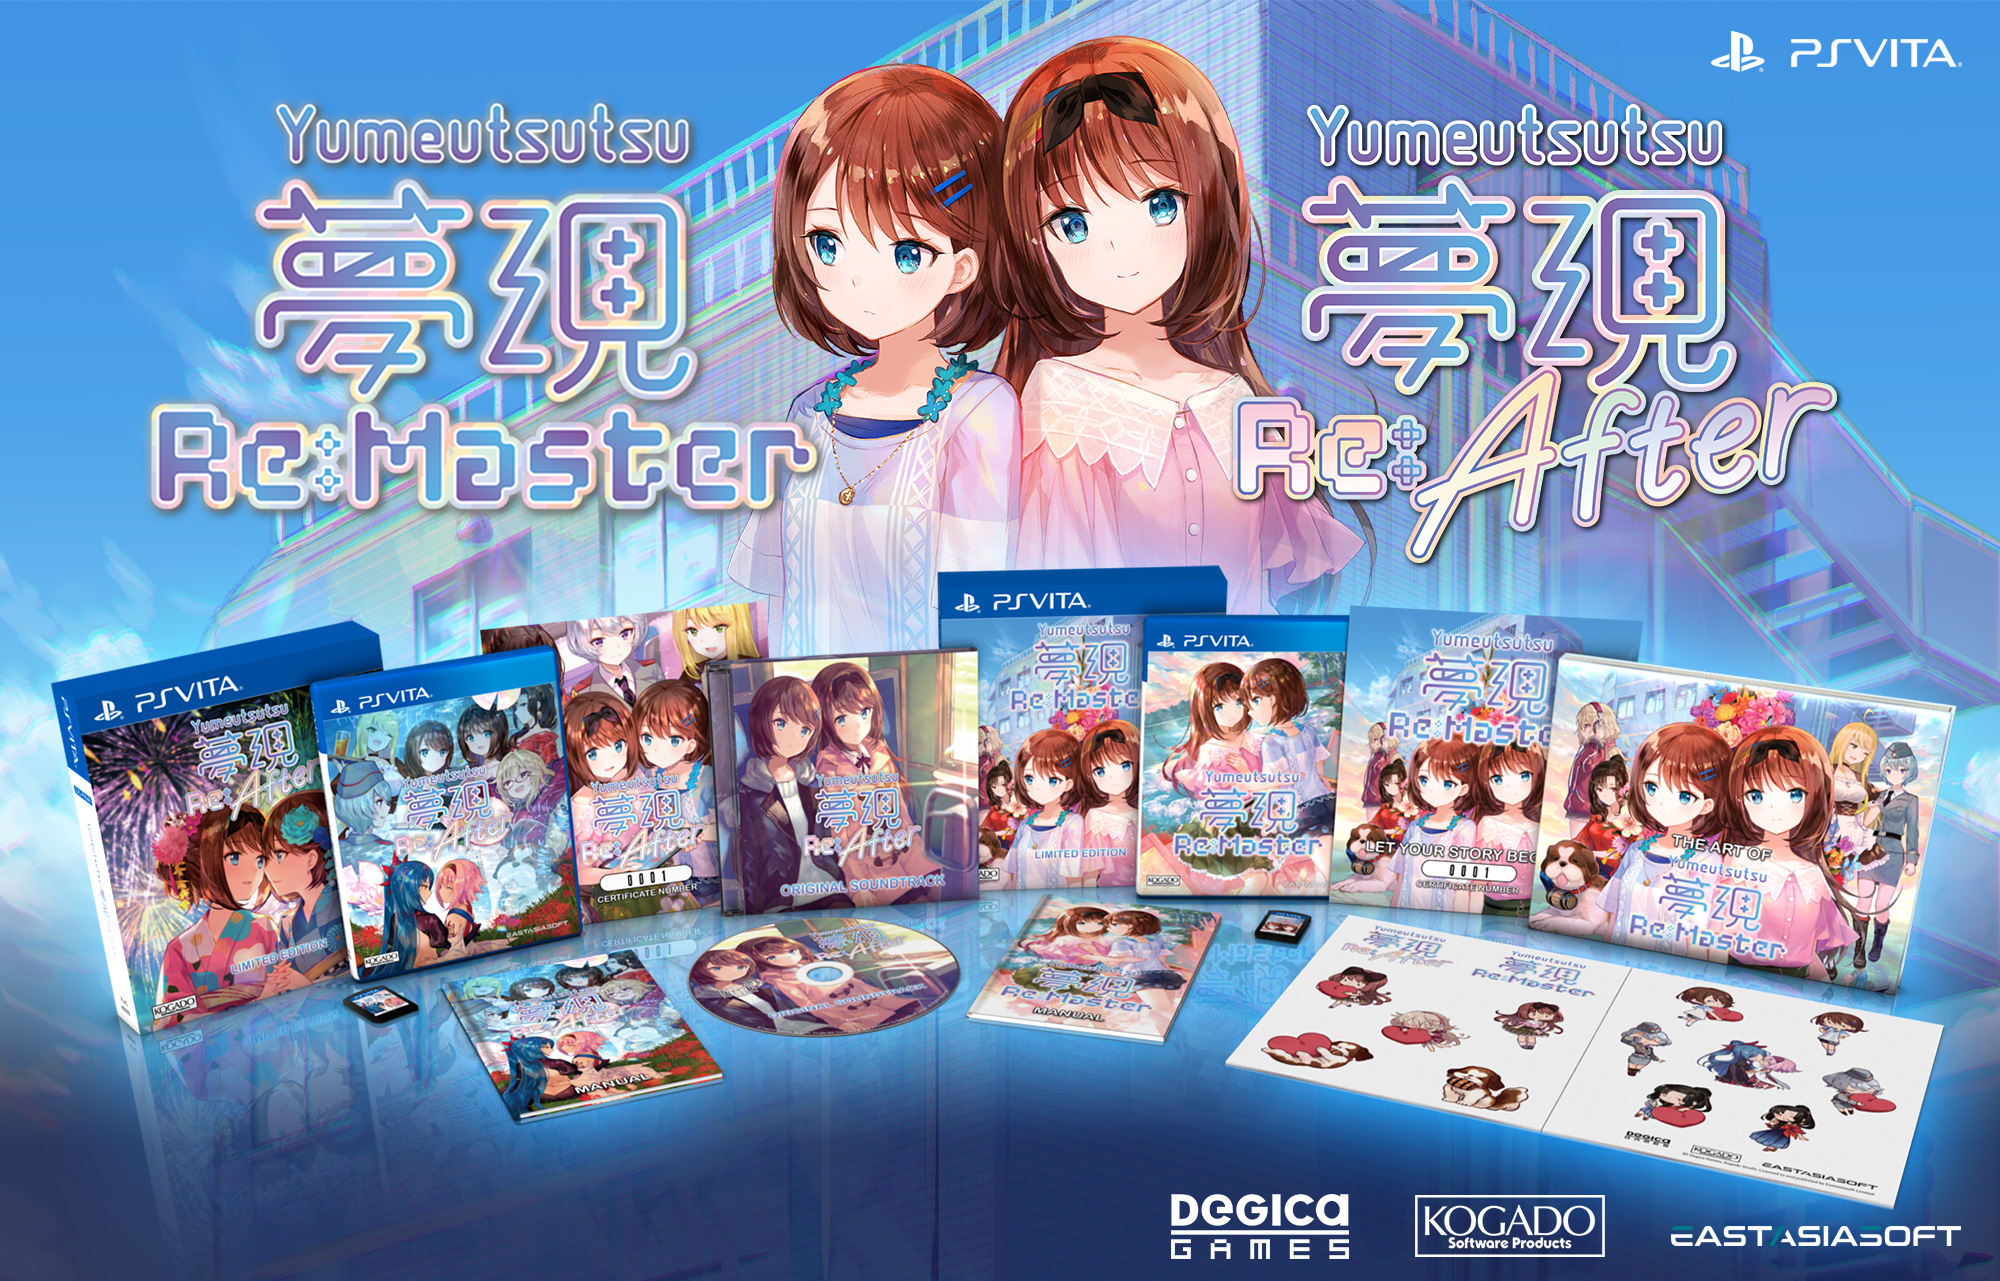 Yumeutsutsu PS Vita Limited Editions